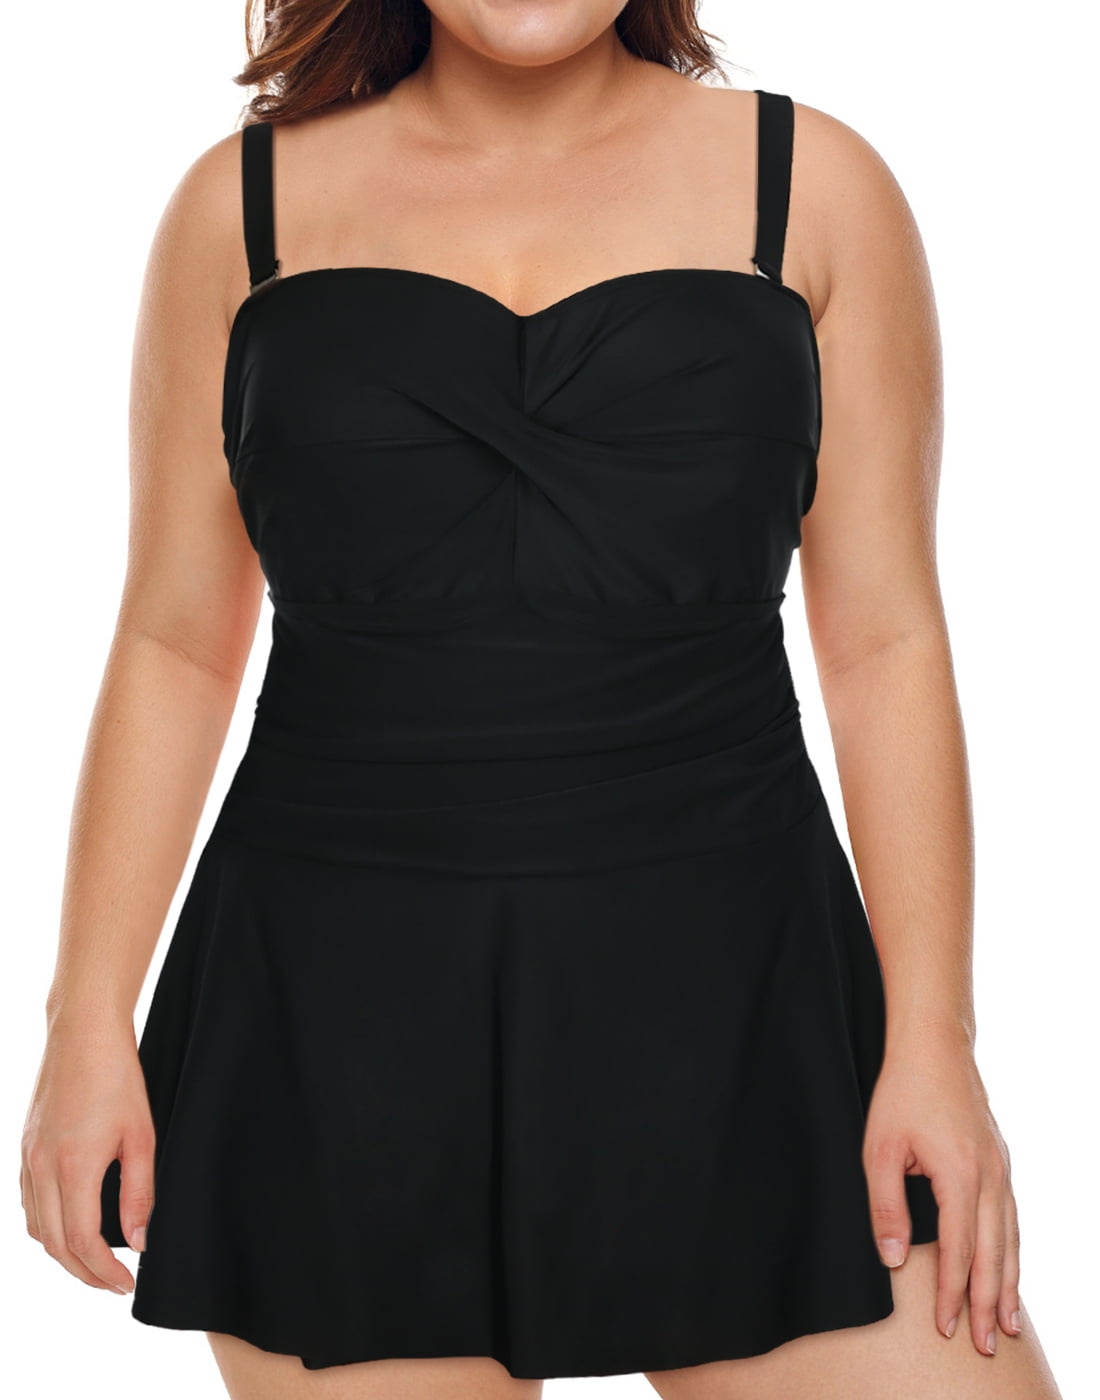 Dakini Dress Women's XS Black Dress Built-In-Bra Swim Cover